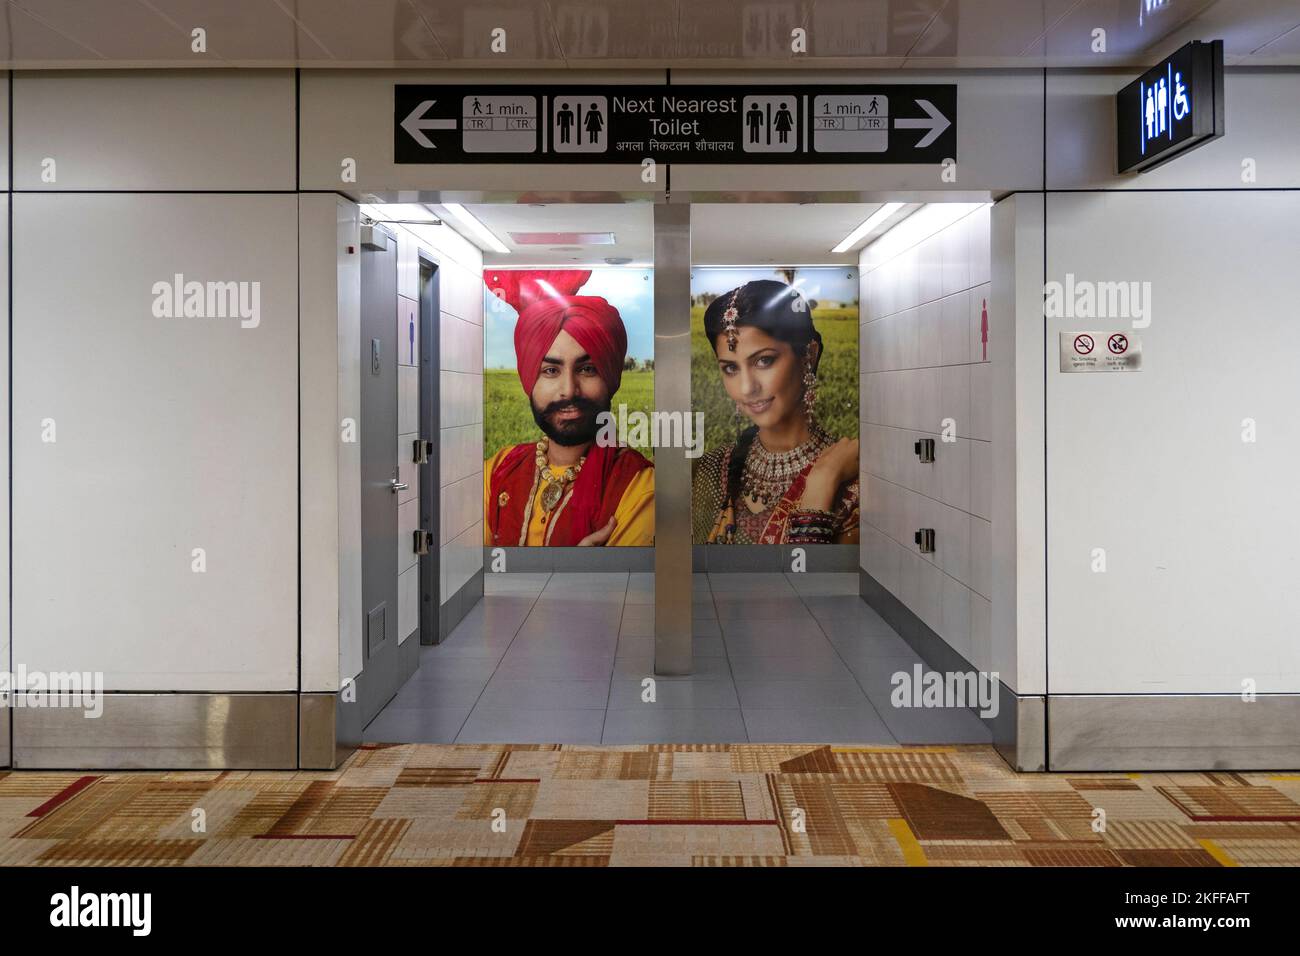 NEW DELHI - SEPTEMBER 16: Creative Interior and entrance to the public toilet of Indira Gandhi International Airport in New Delhi on September 16. 202 Stock Photo